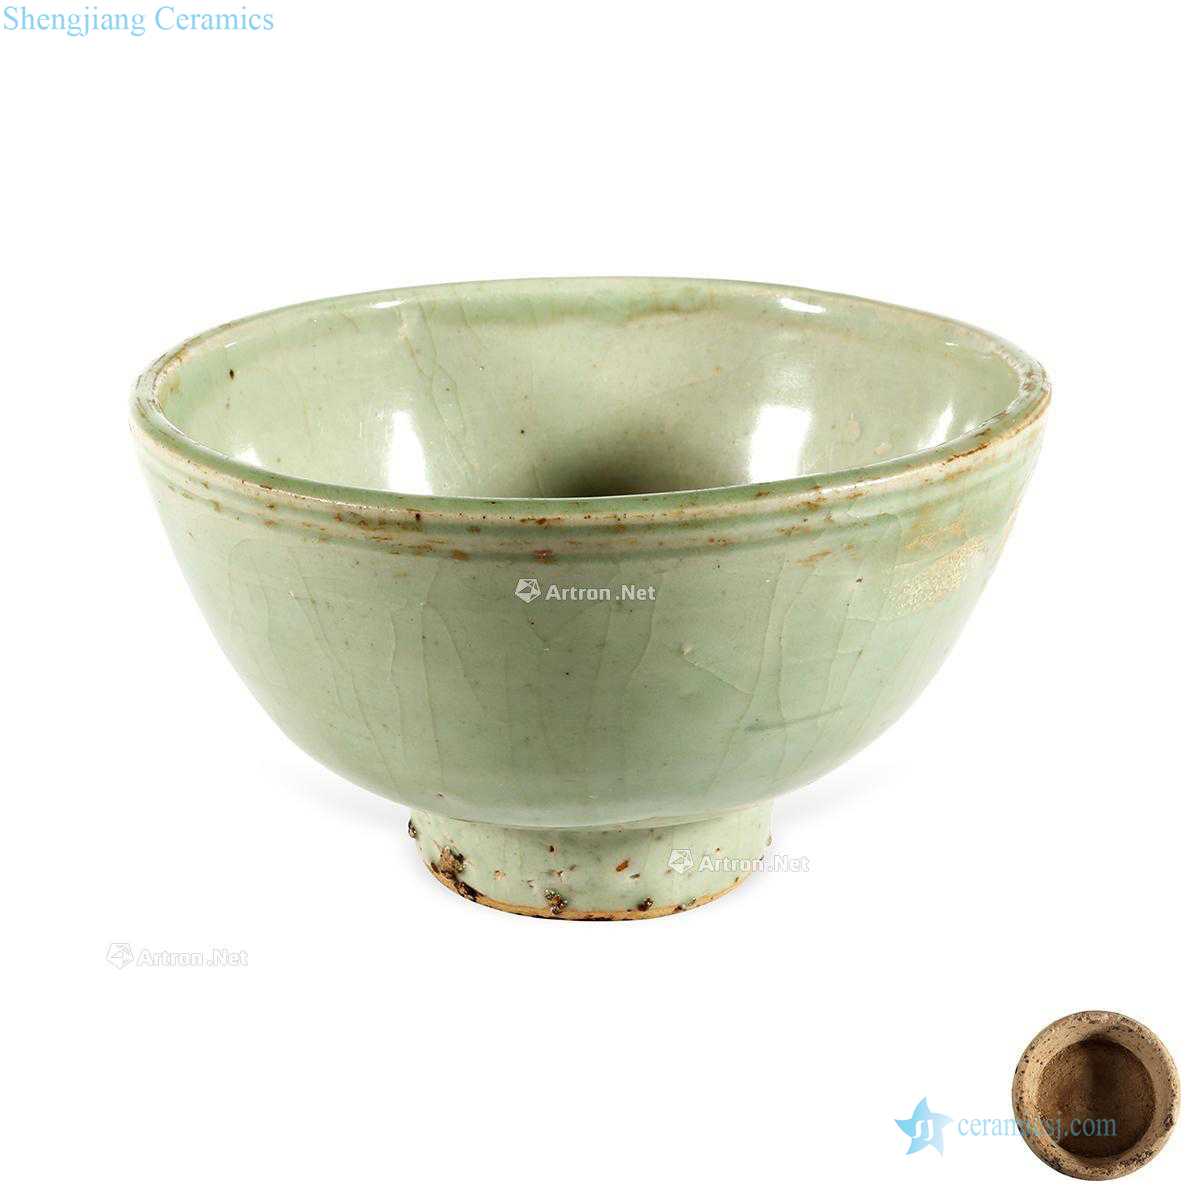 The song dynasty Longquan celadon glaze bowls